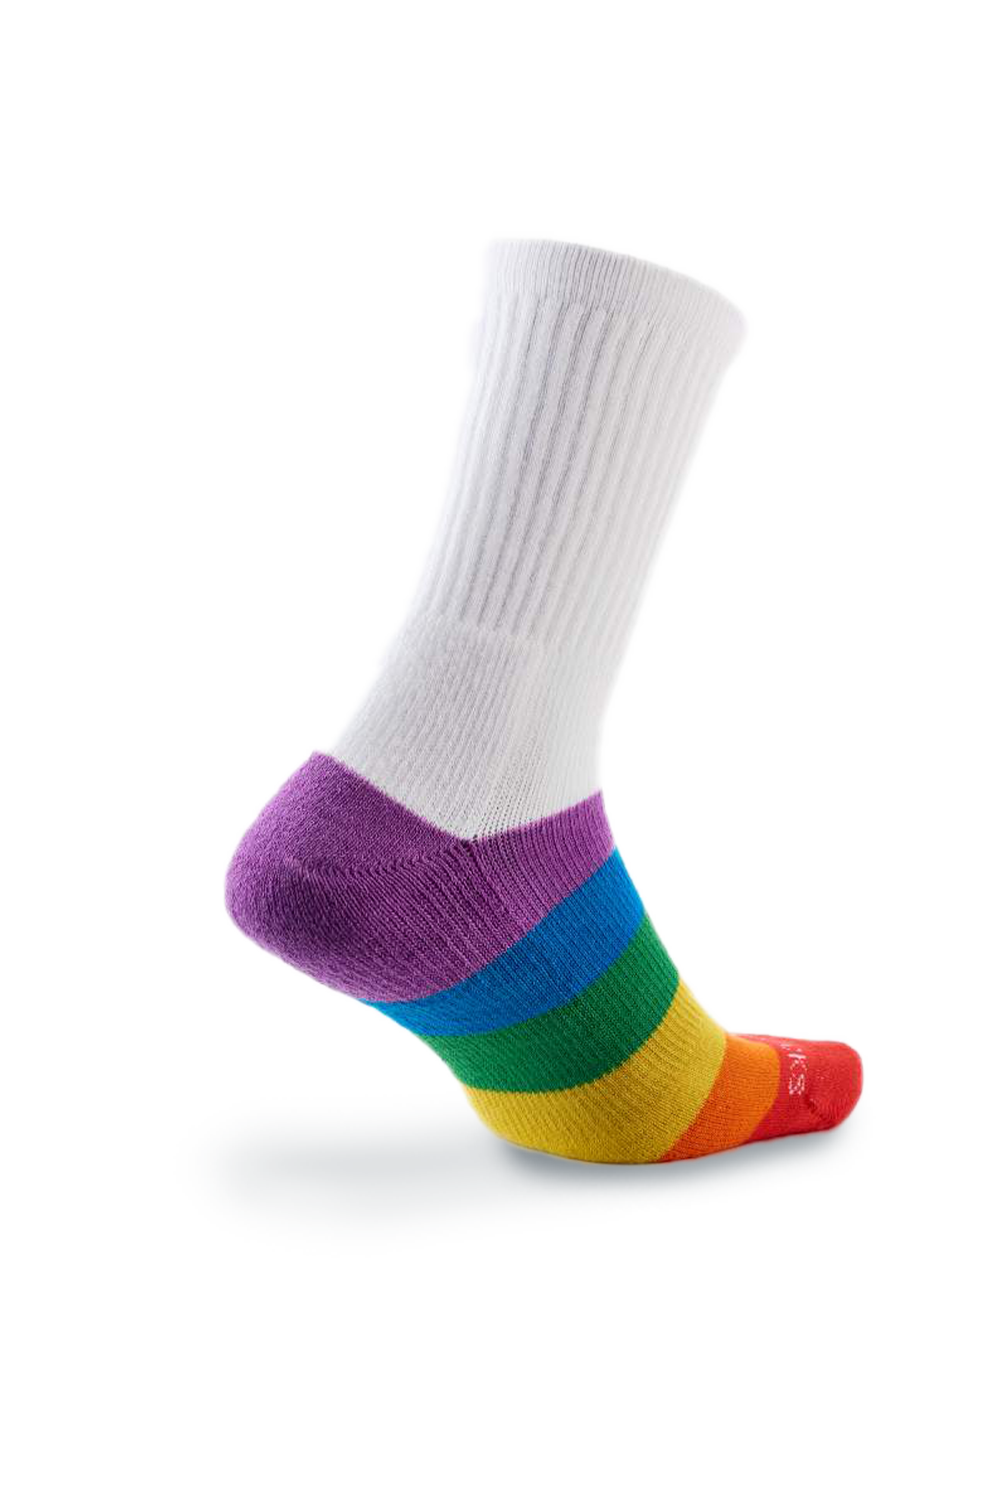 Kikko Socks Athlete Crew II (Rainbow White)